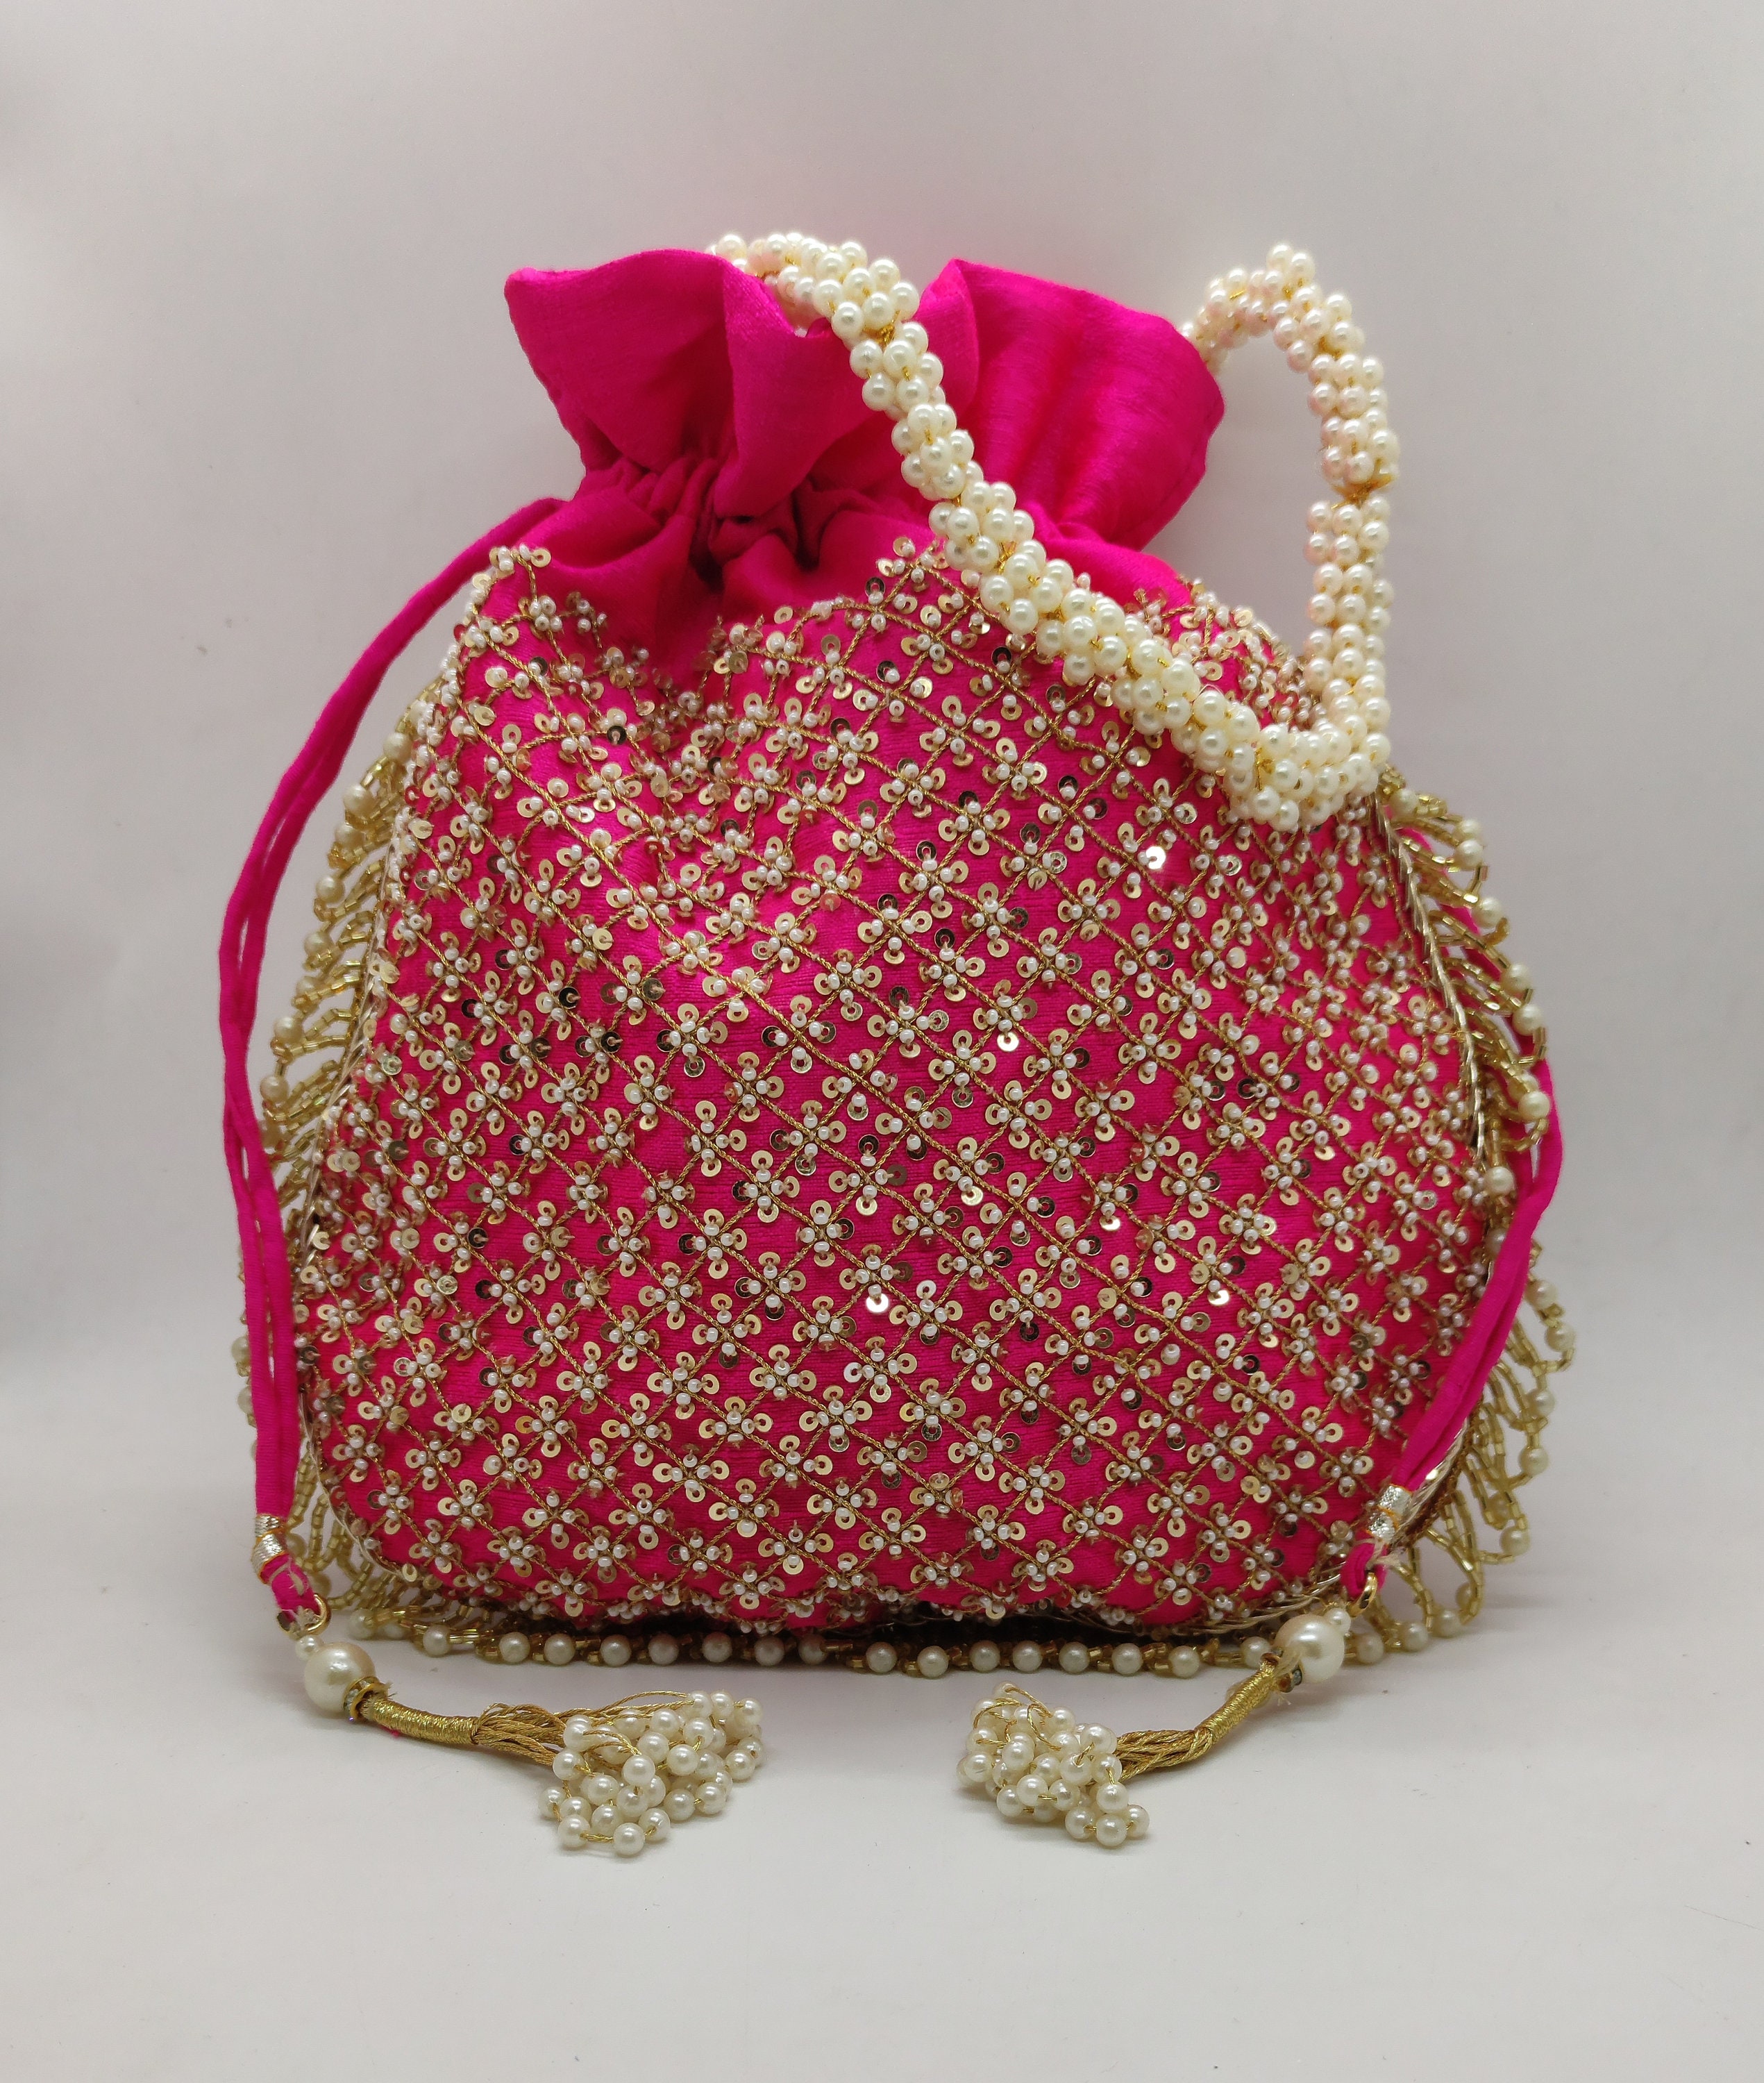 Waterproof Canvas Mini Handbag, Diamond Mini Tote Bag, Shoulder Bag For  Women, Solid Color Lady Purse With Zipper Closure, Nylon Hobo Bag From  Dicky0750b, $32.51 | DHgate.Com